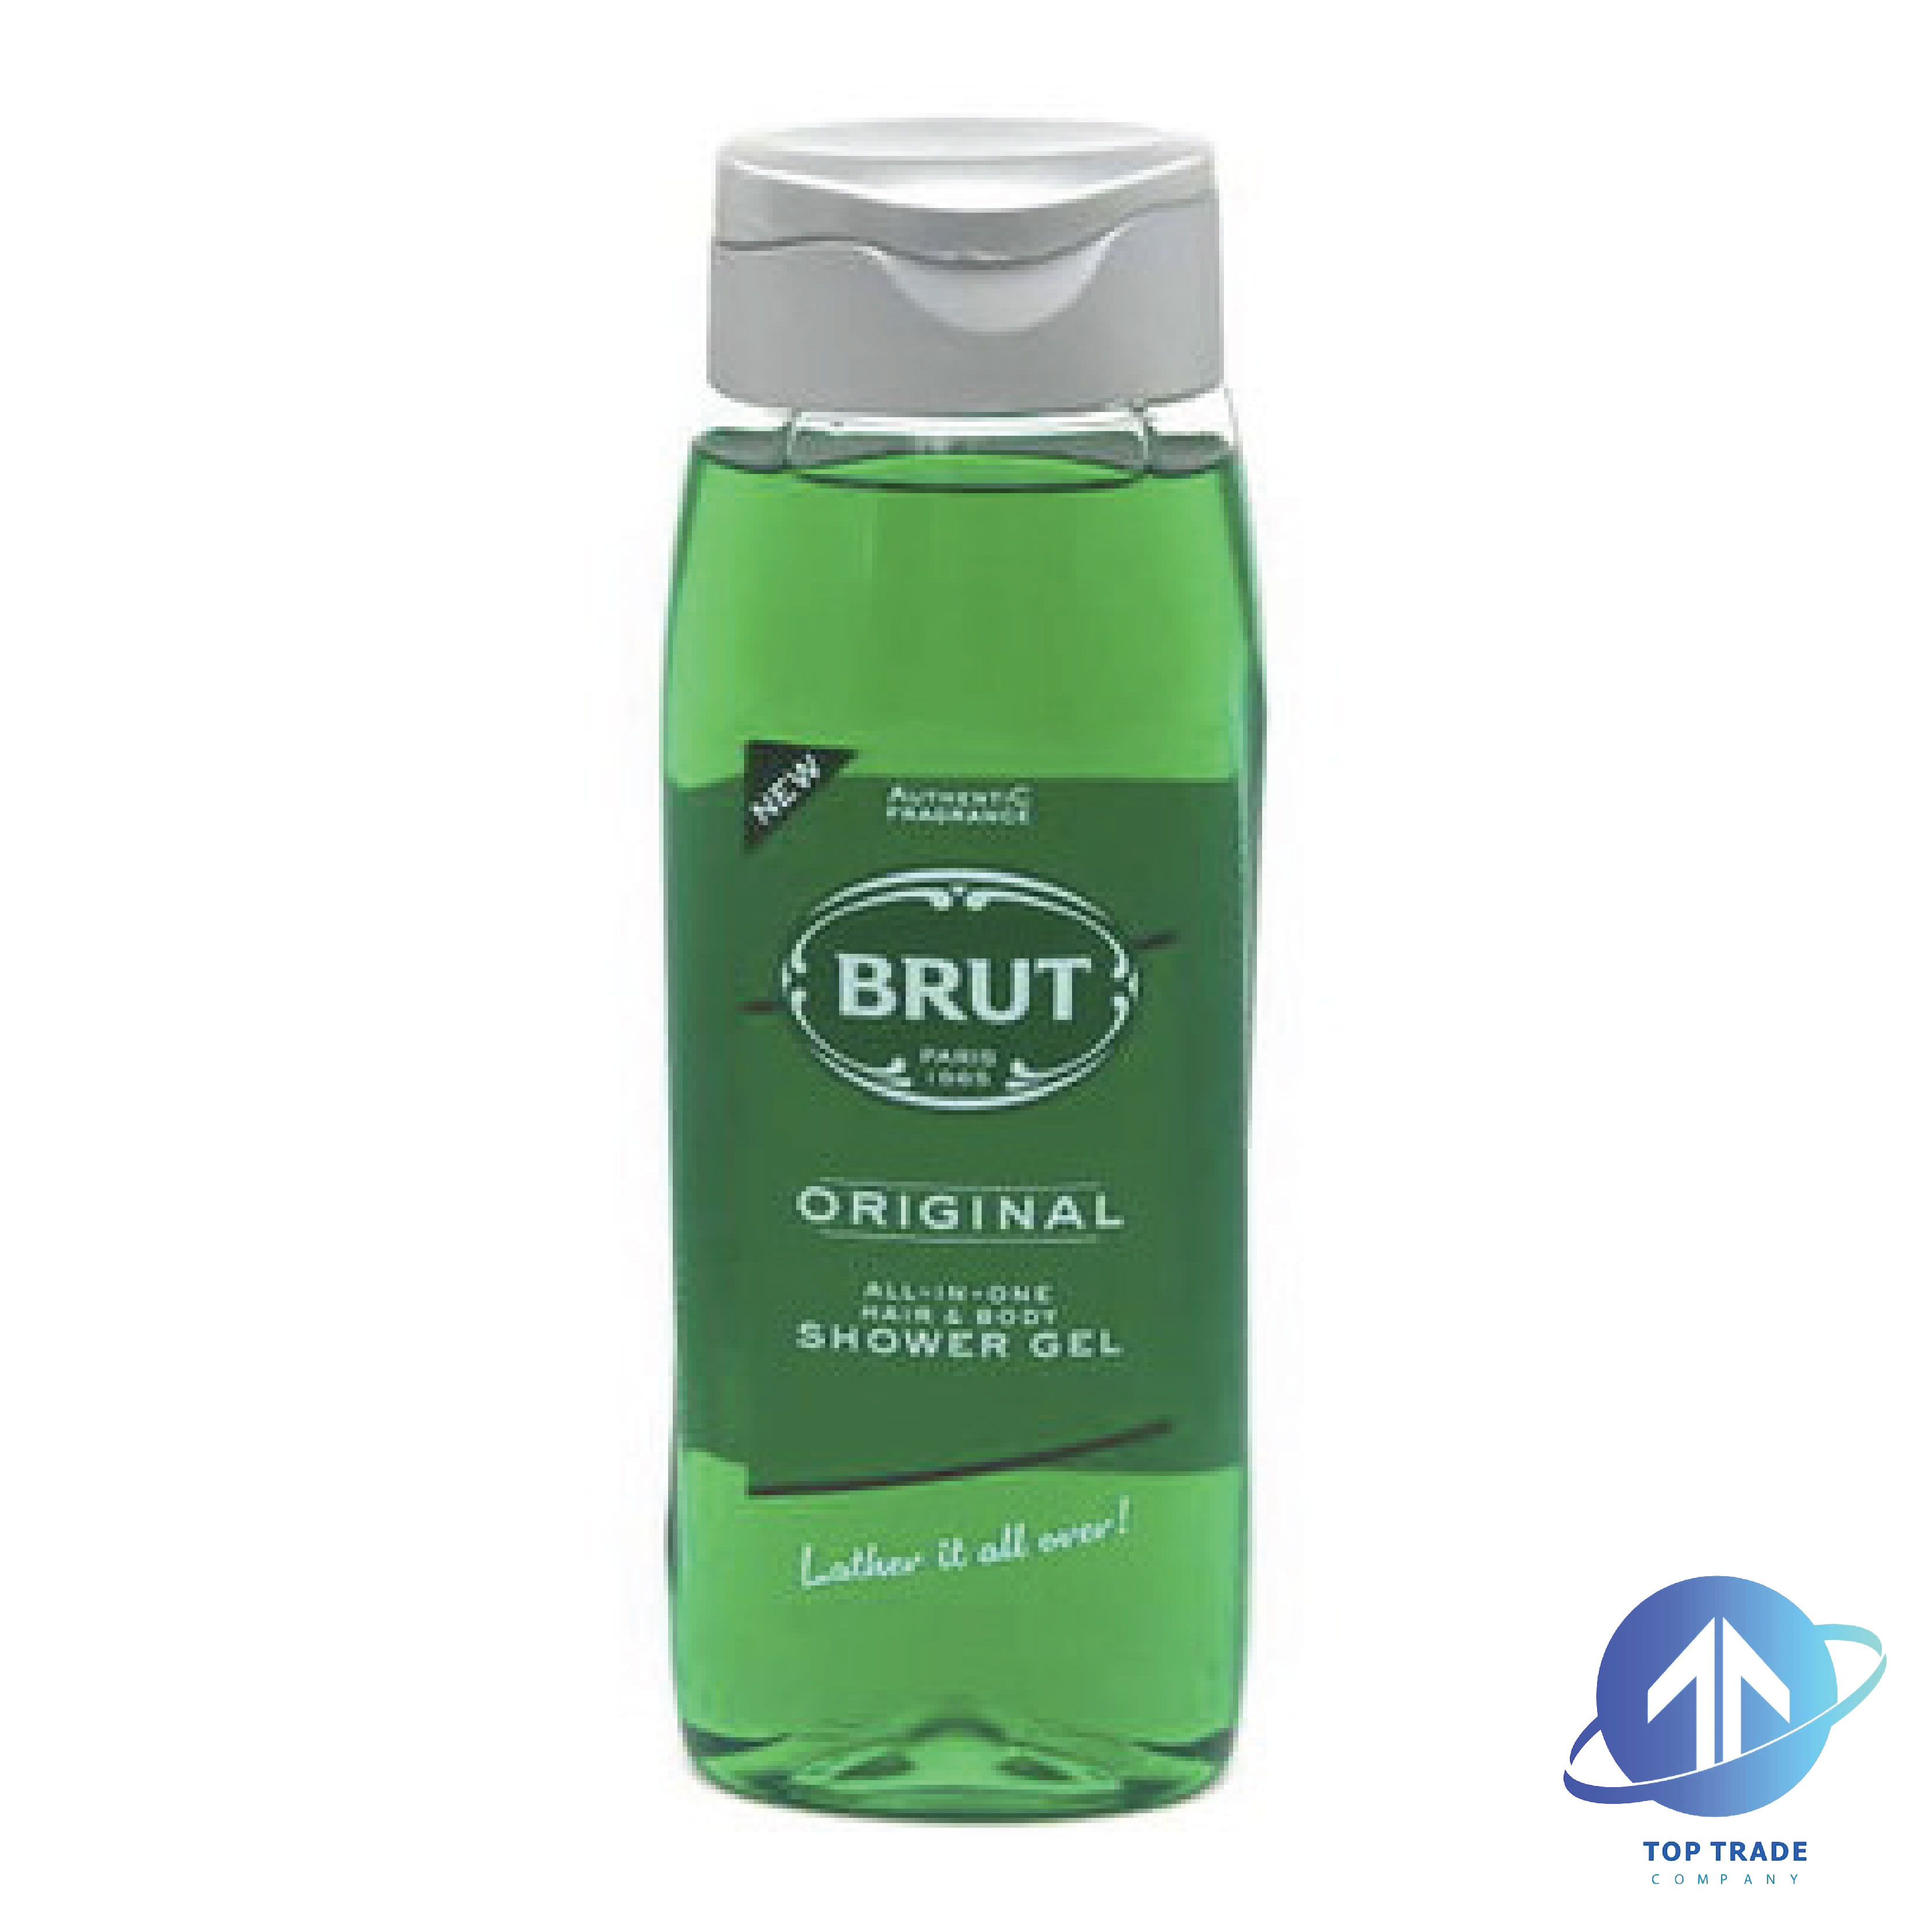 Brut shower gel Original 500ml